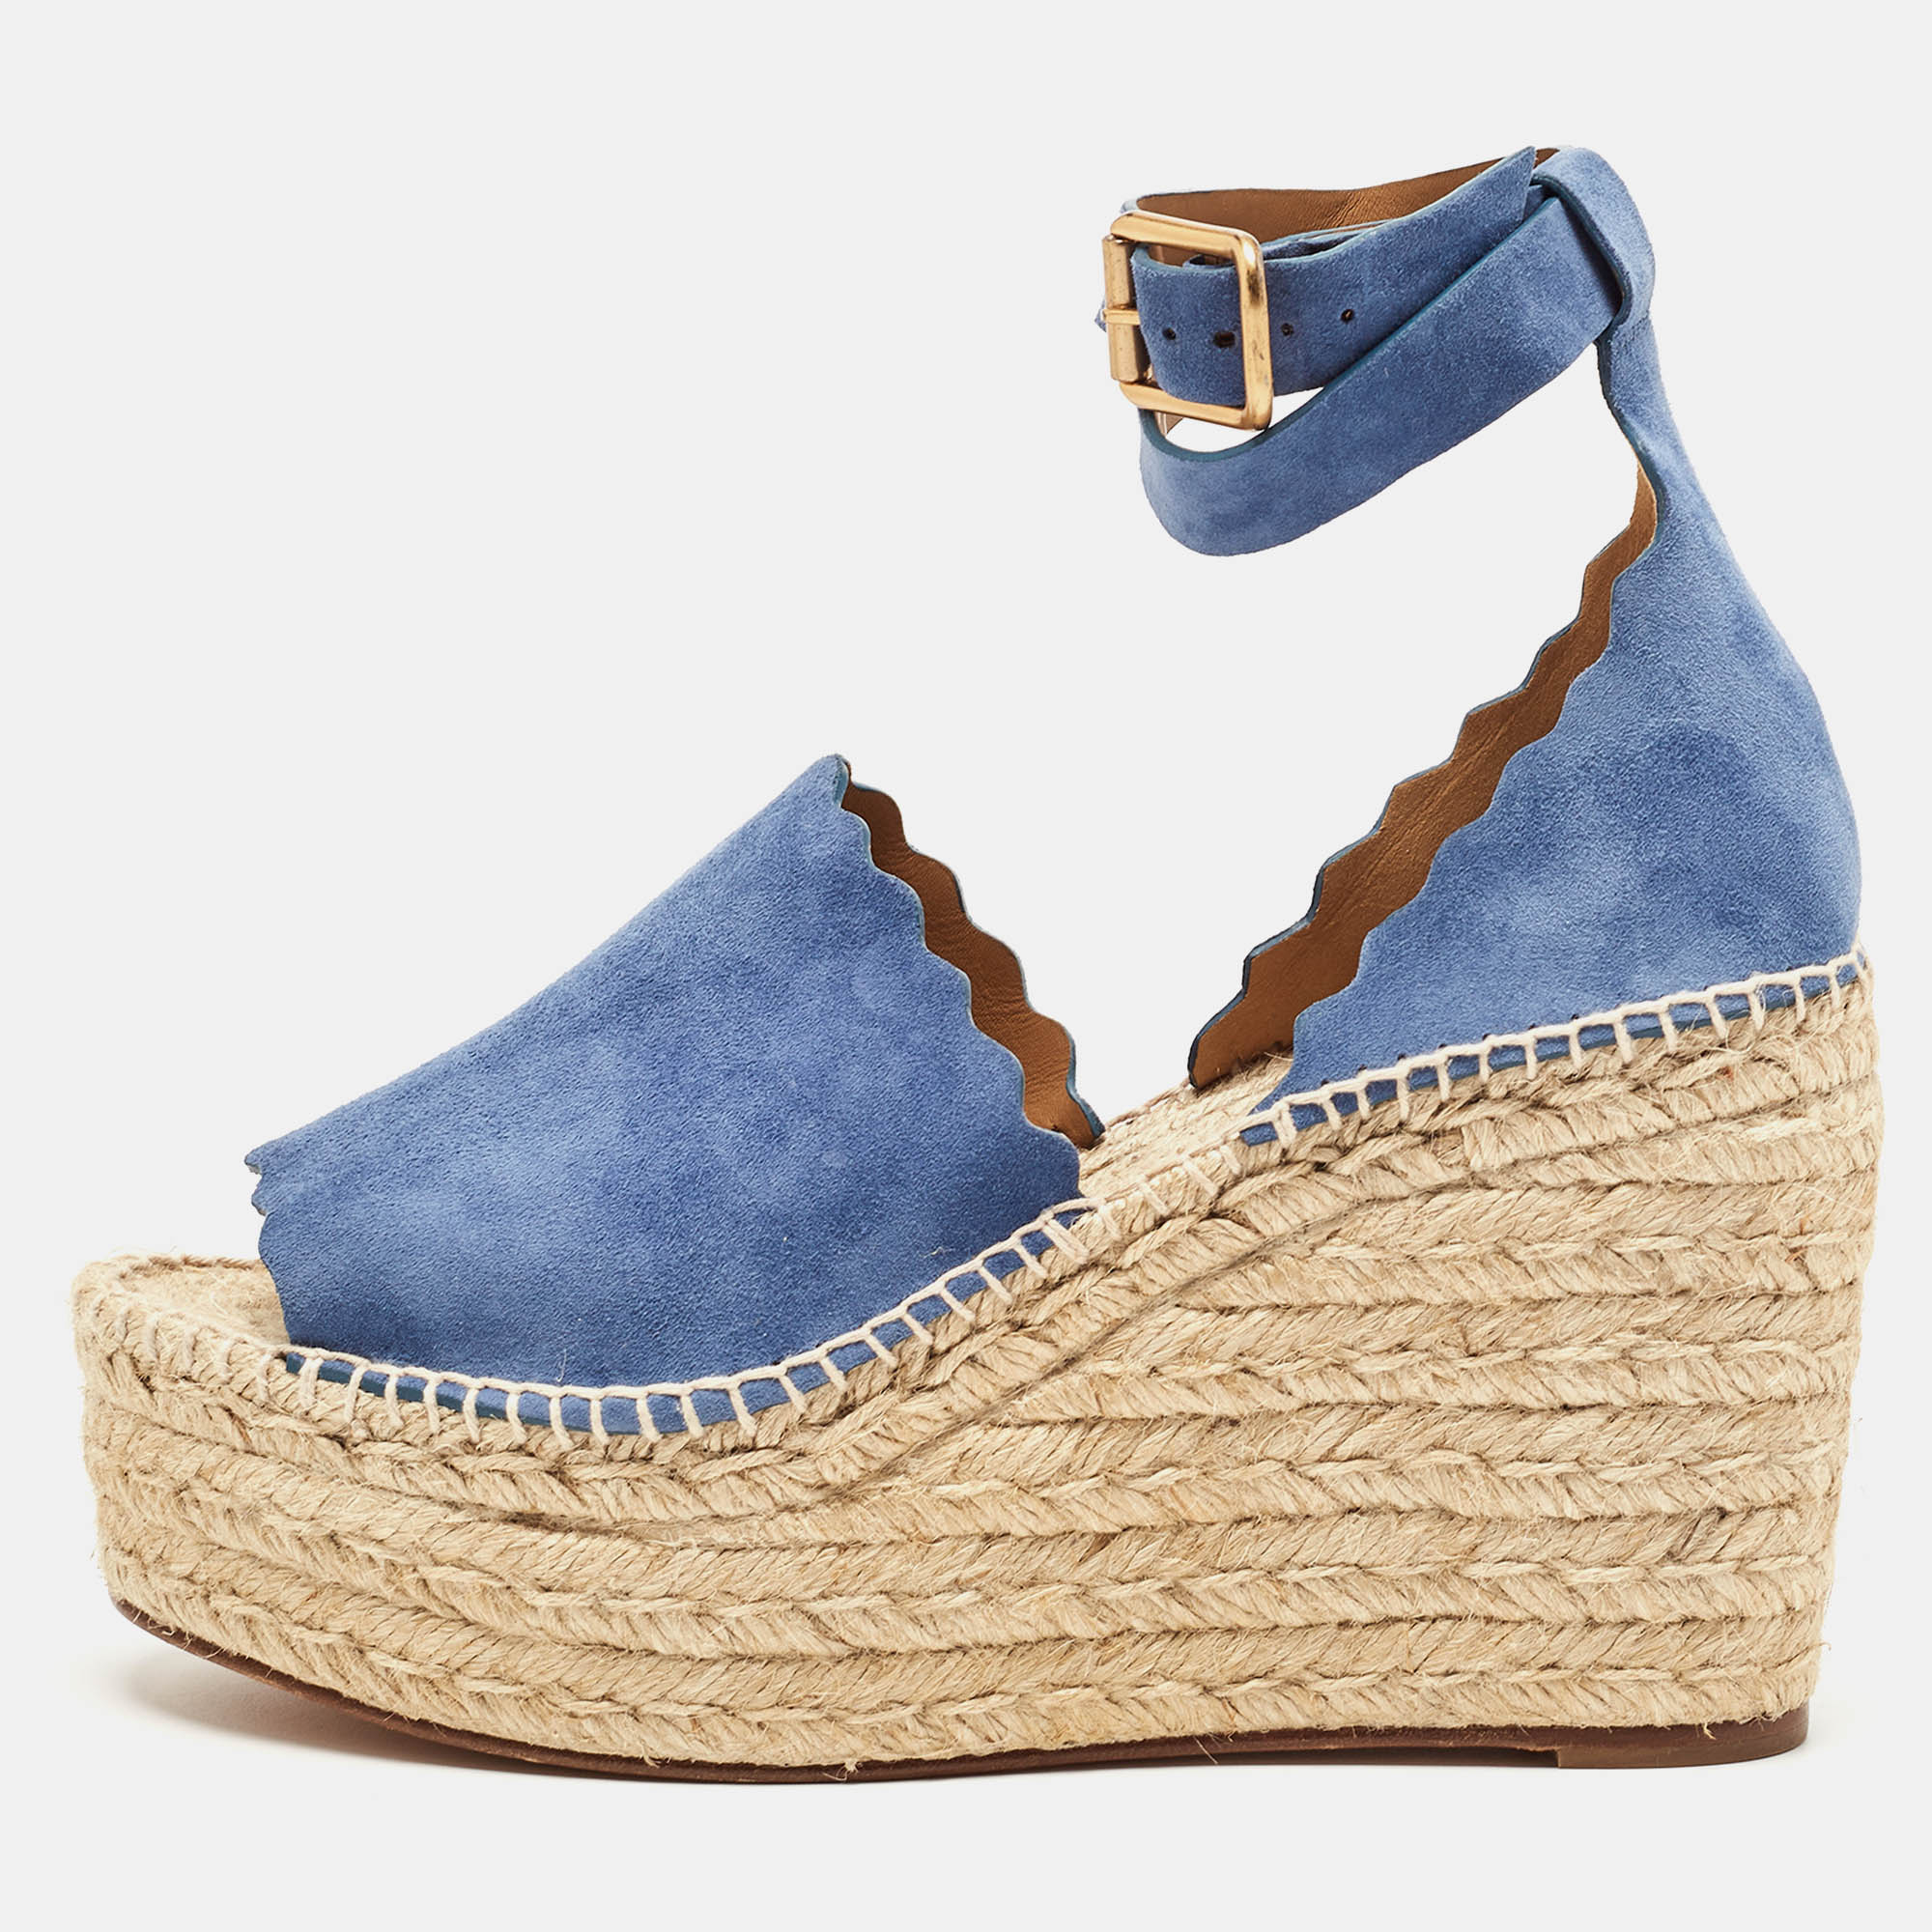 Chloe blue suede lauren wedge espadrille sandals size 41